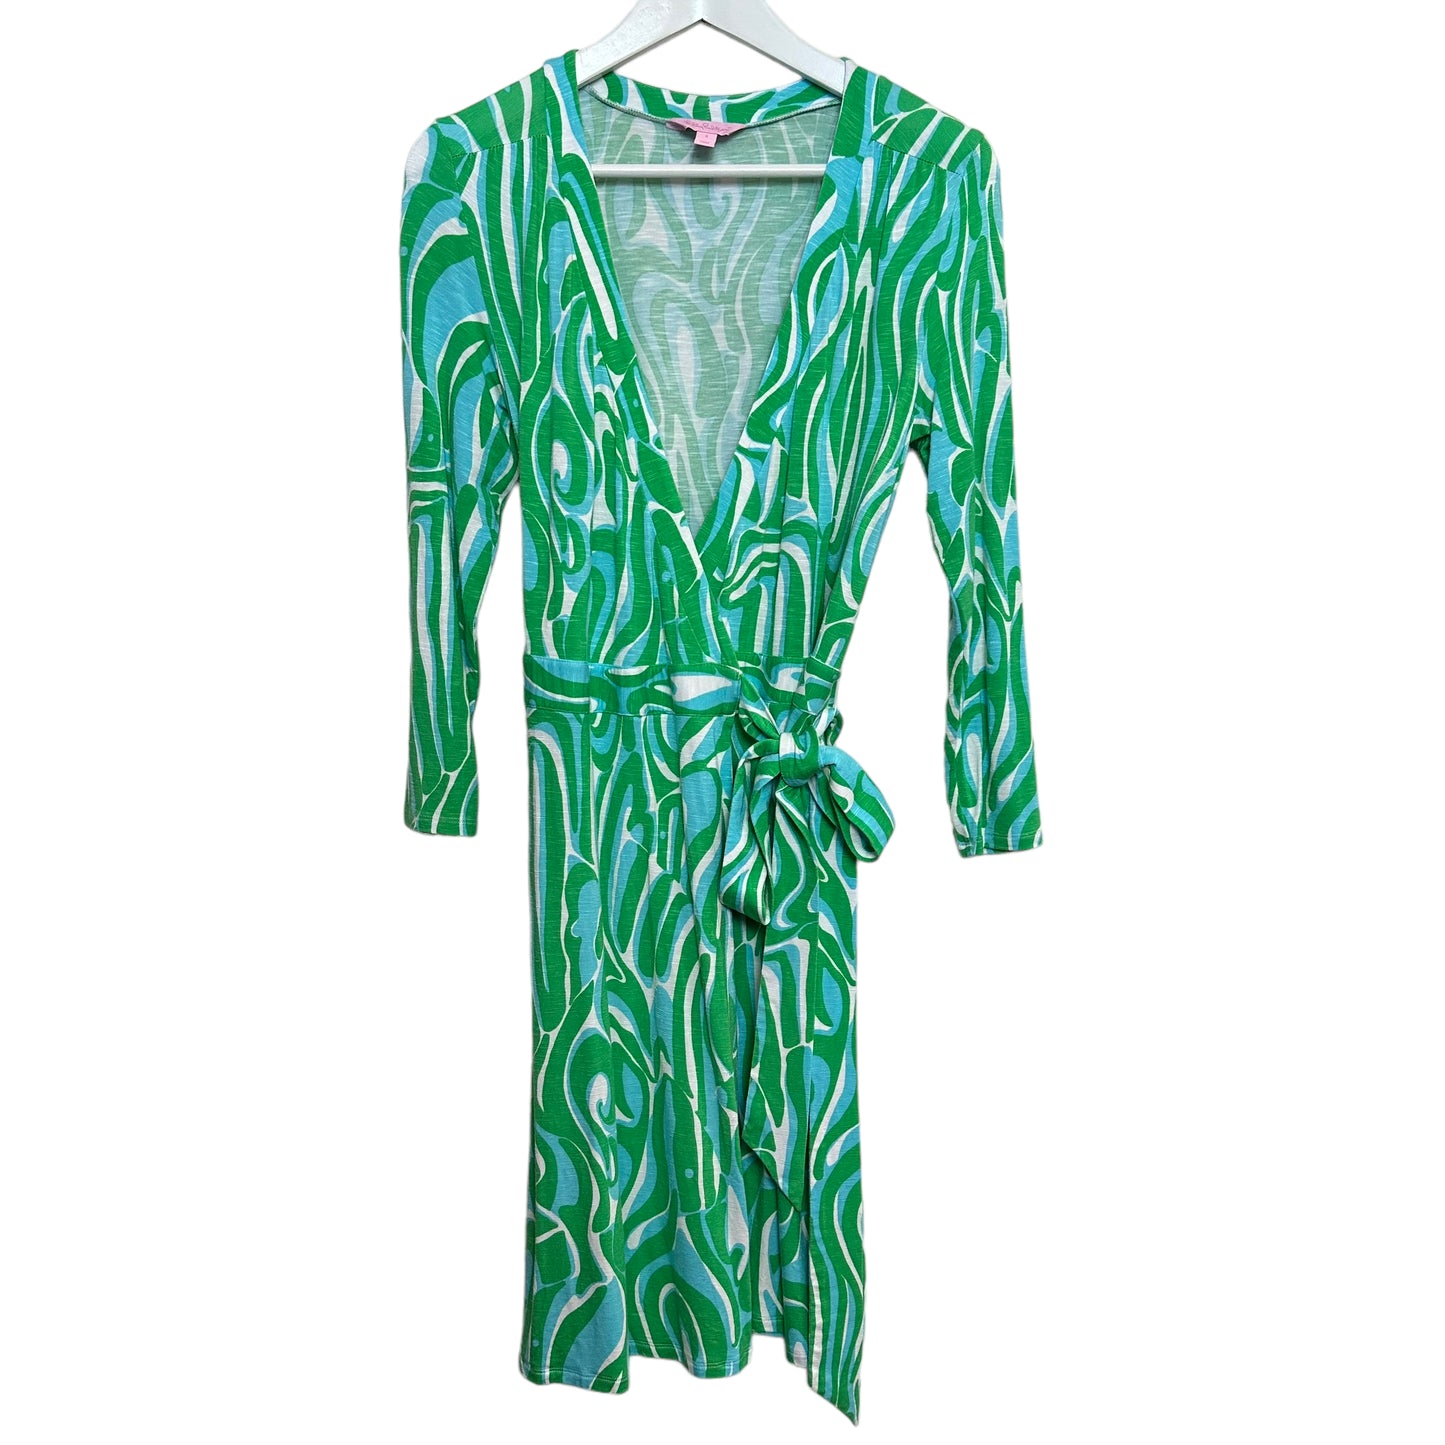 Lilly Pulitzer Meridan Wrap Dress Blue Green Swirl 3/4 Length Sleeves Small